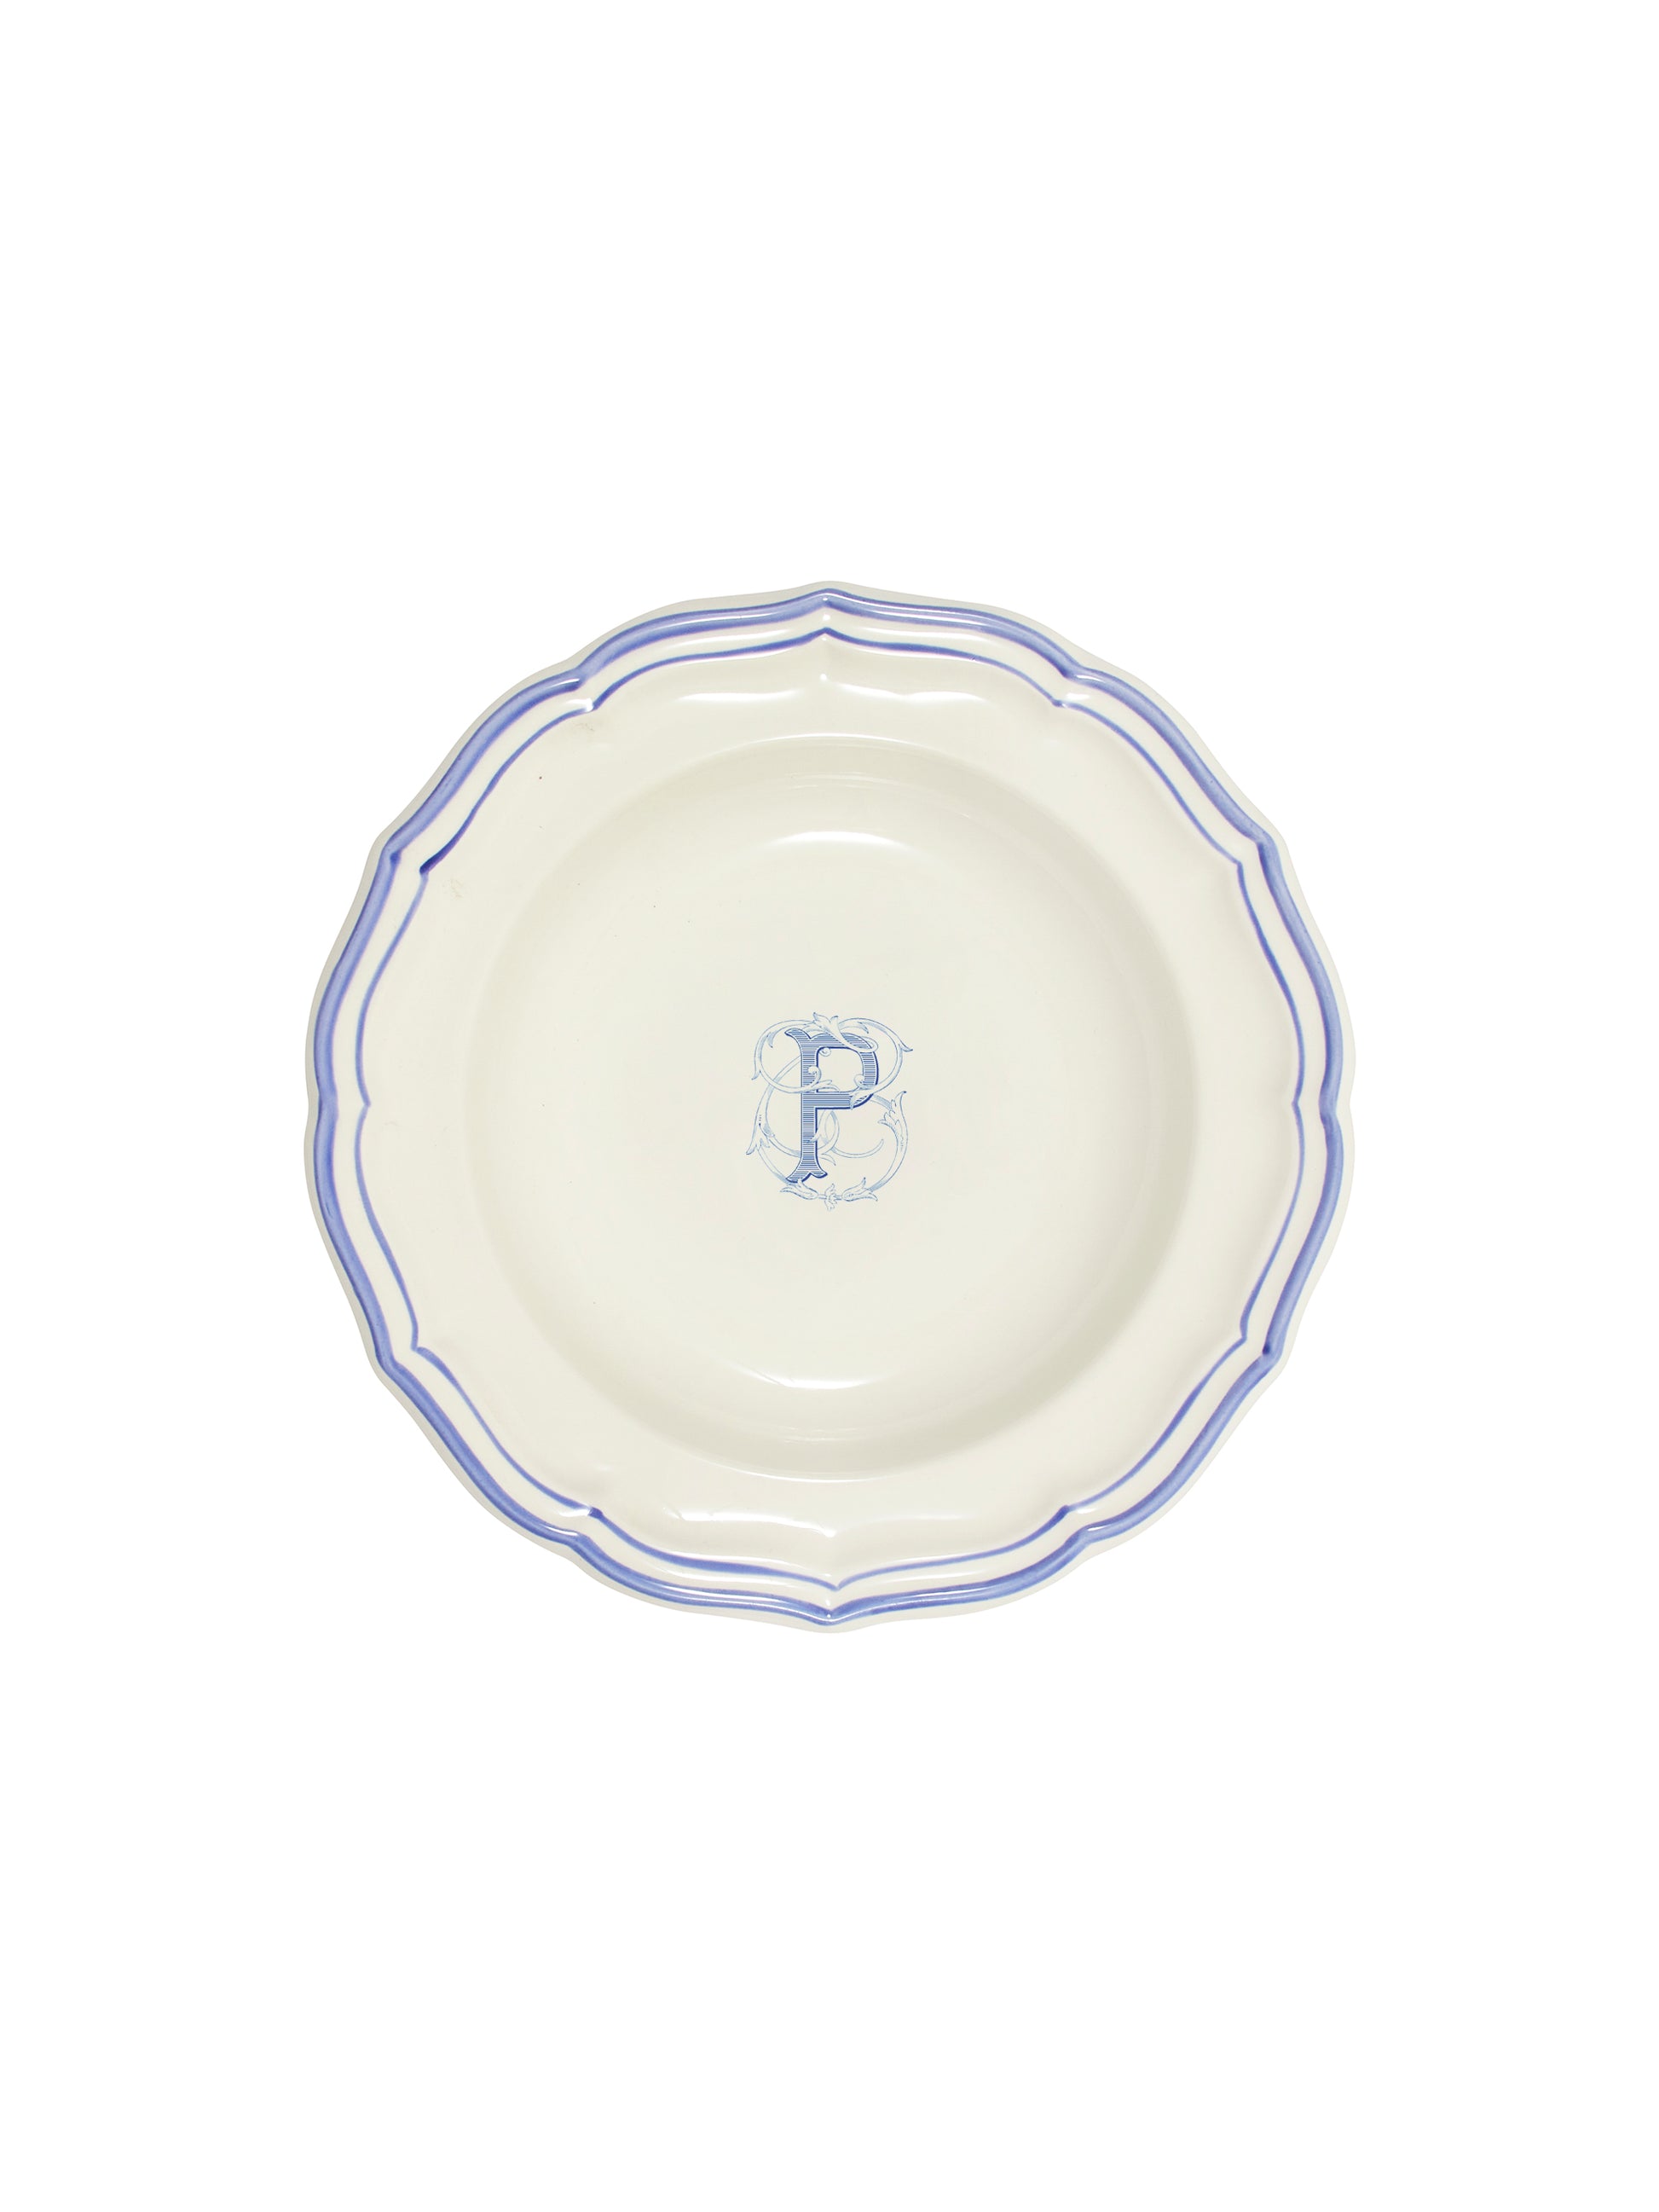 Gien Filet Bleu Monogram Soup Plate P Weston Table